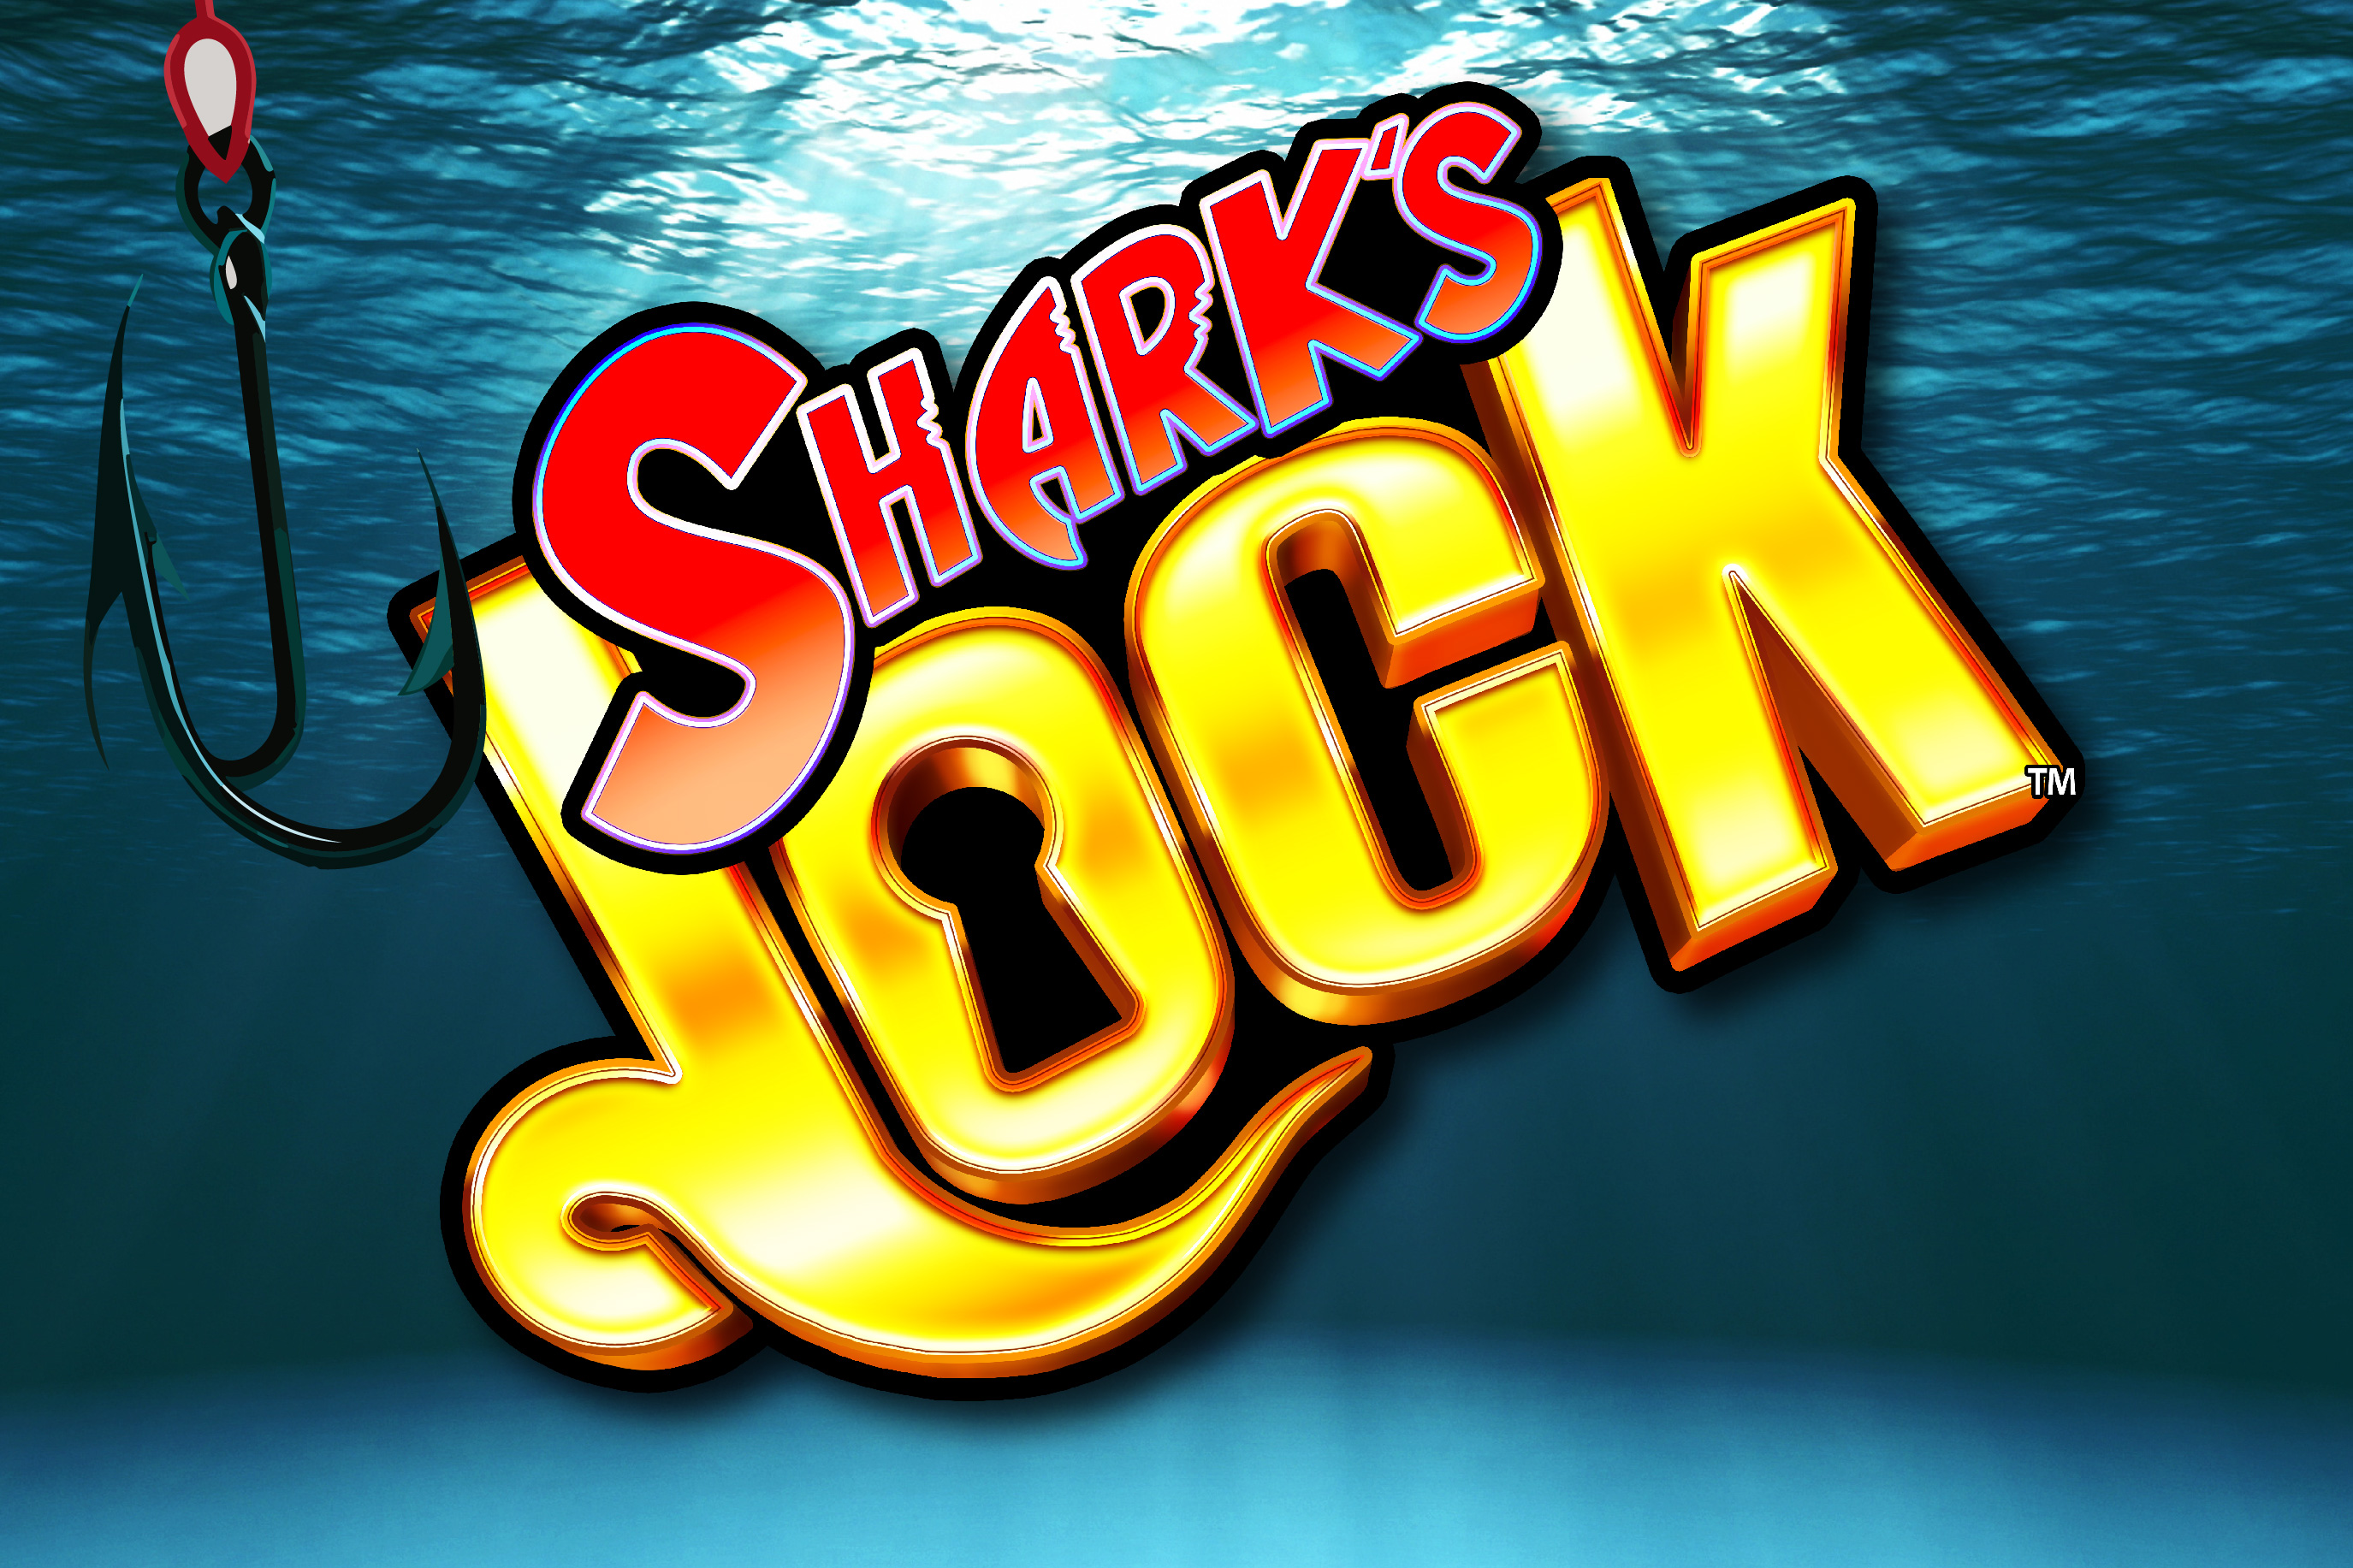 Shark's Lock slot design